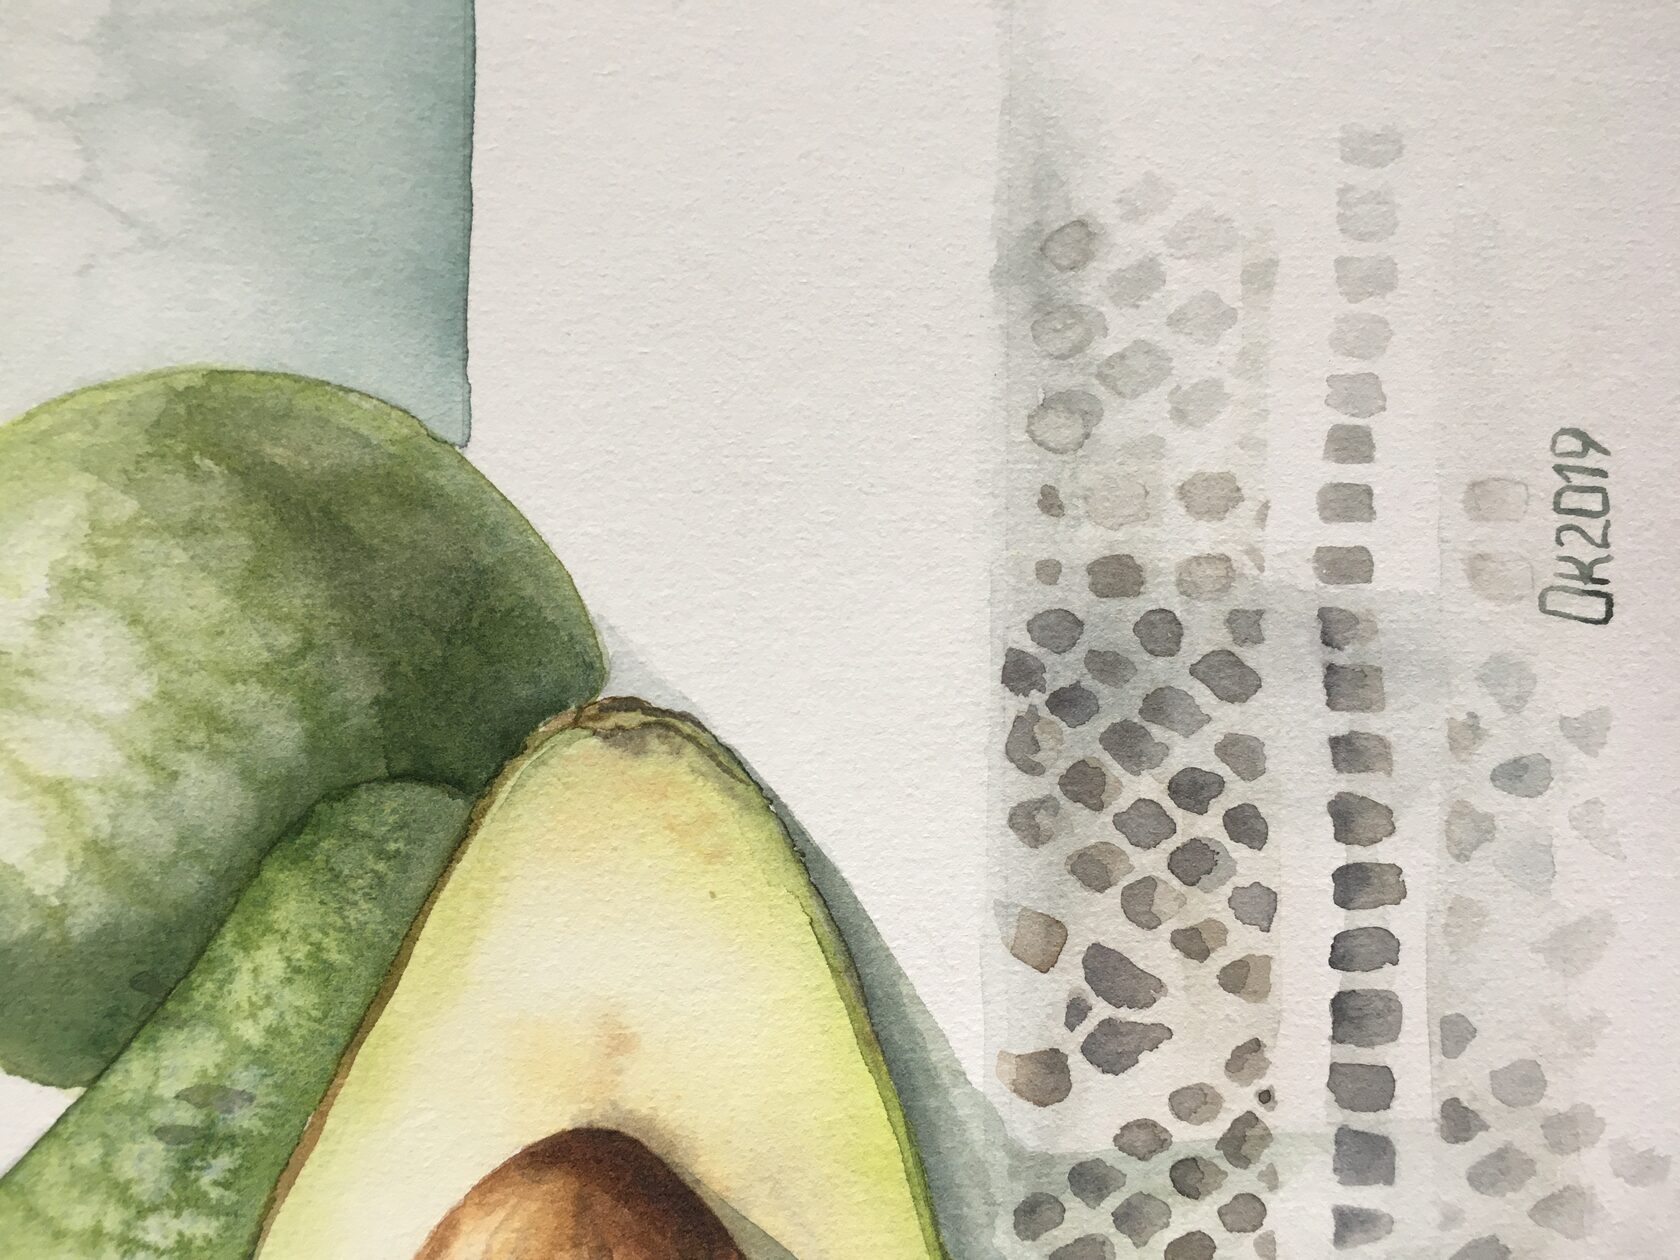 avocado watercolor painting